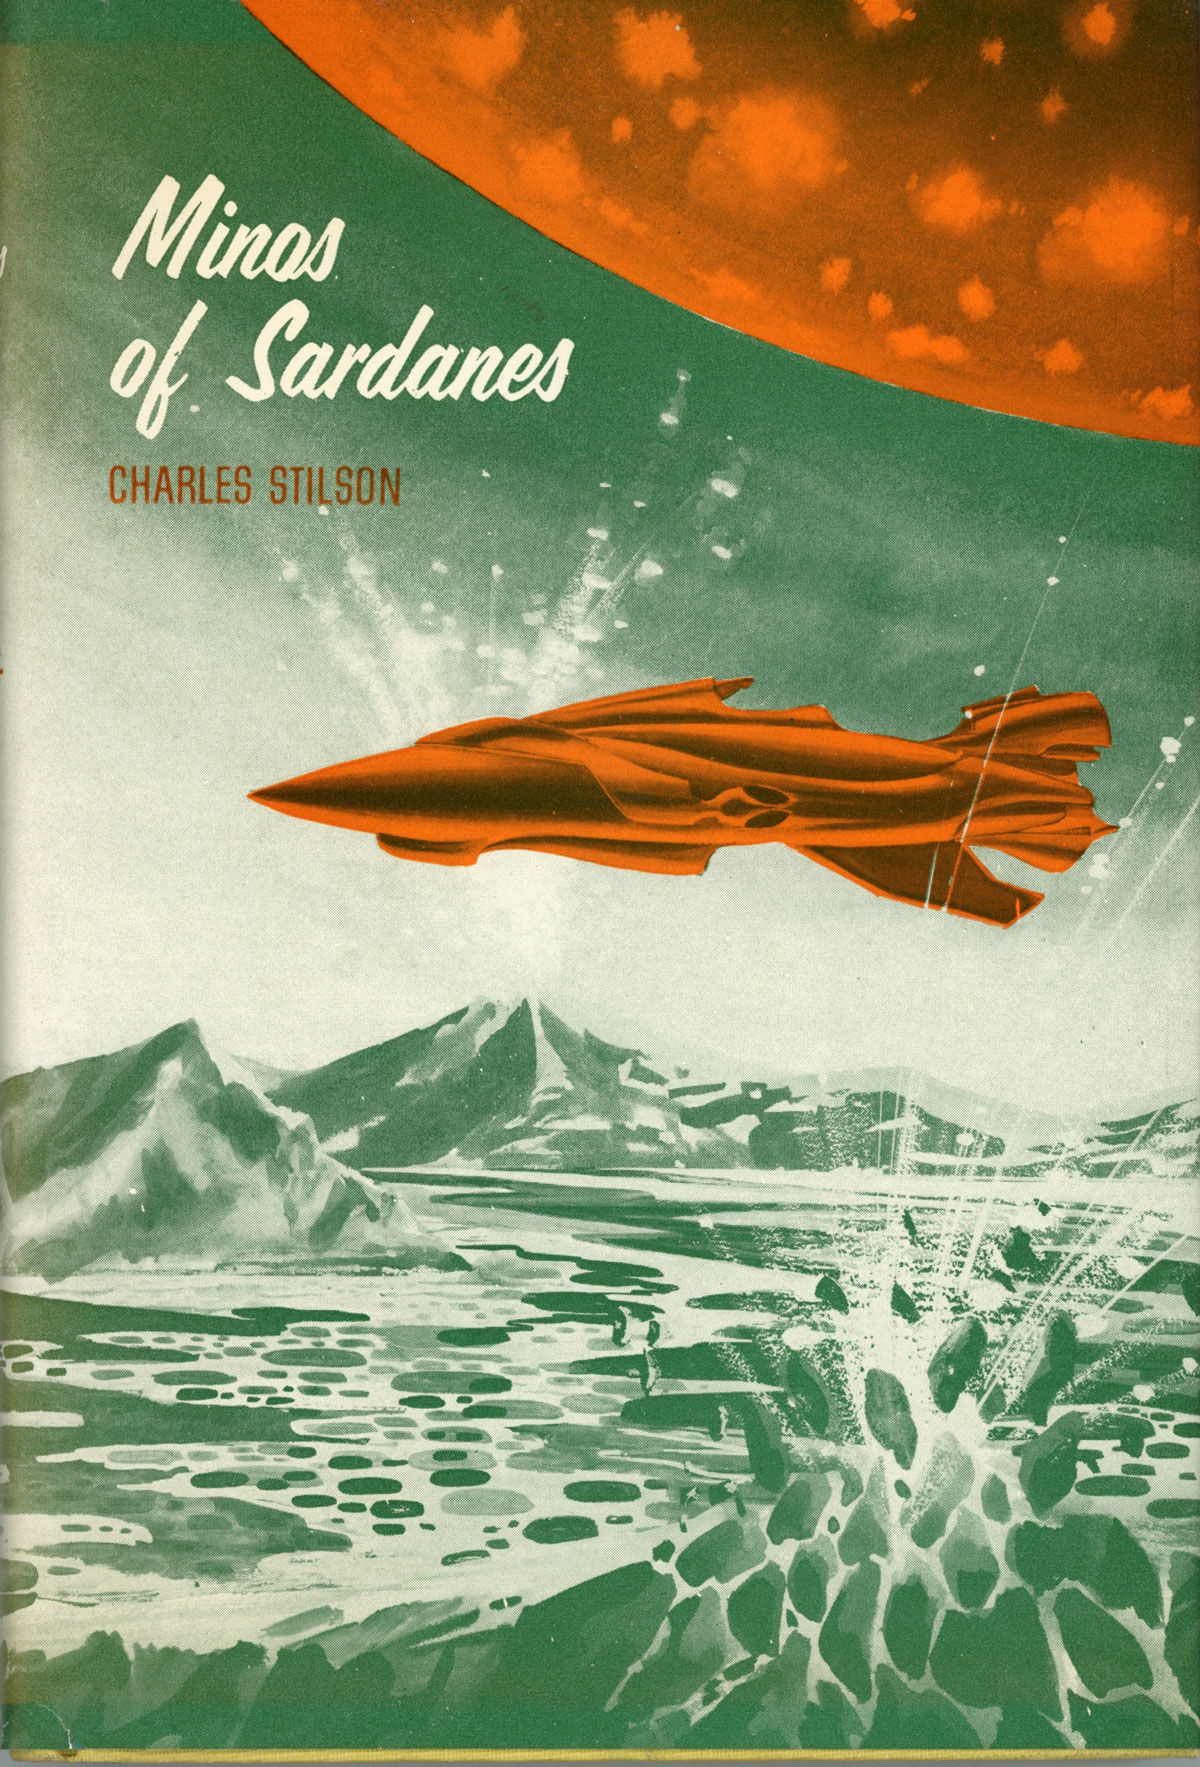 Minos of Sardanes cover